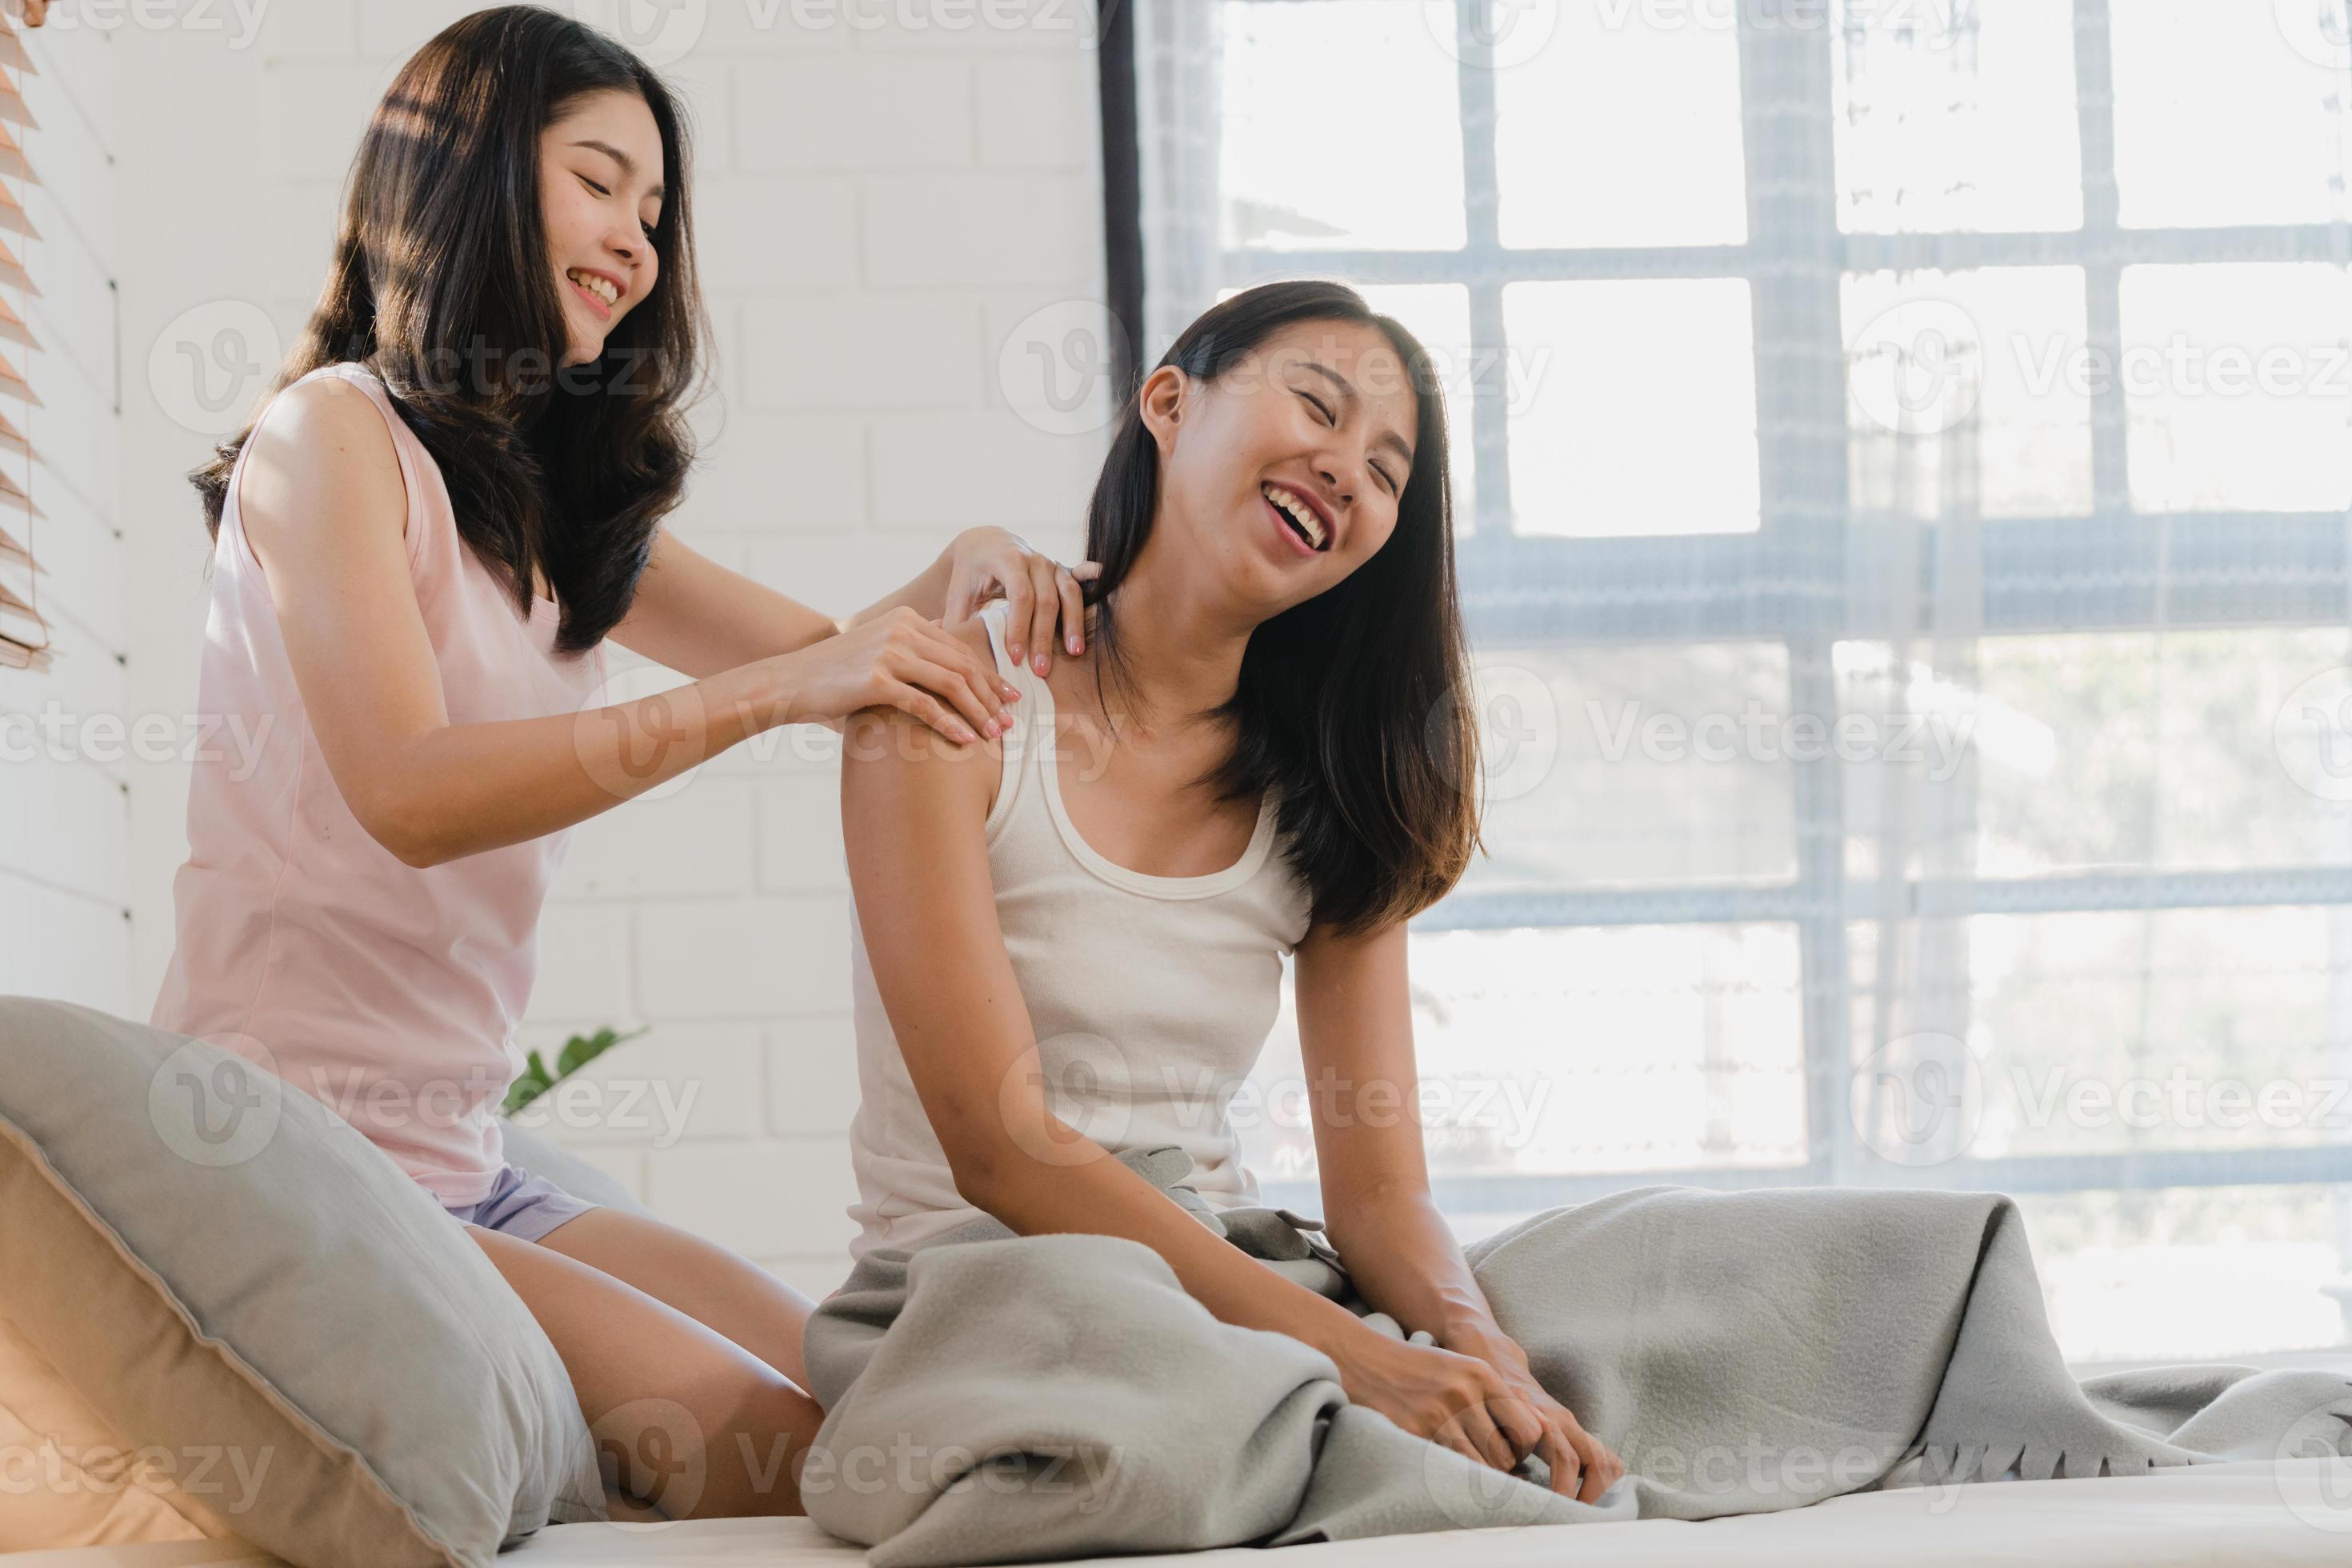 david chadderton recommends asian lesbian oil massage pic